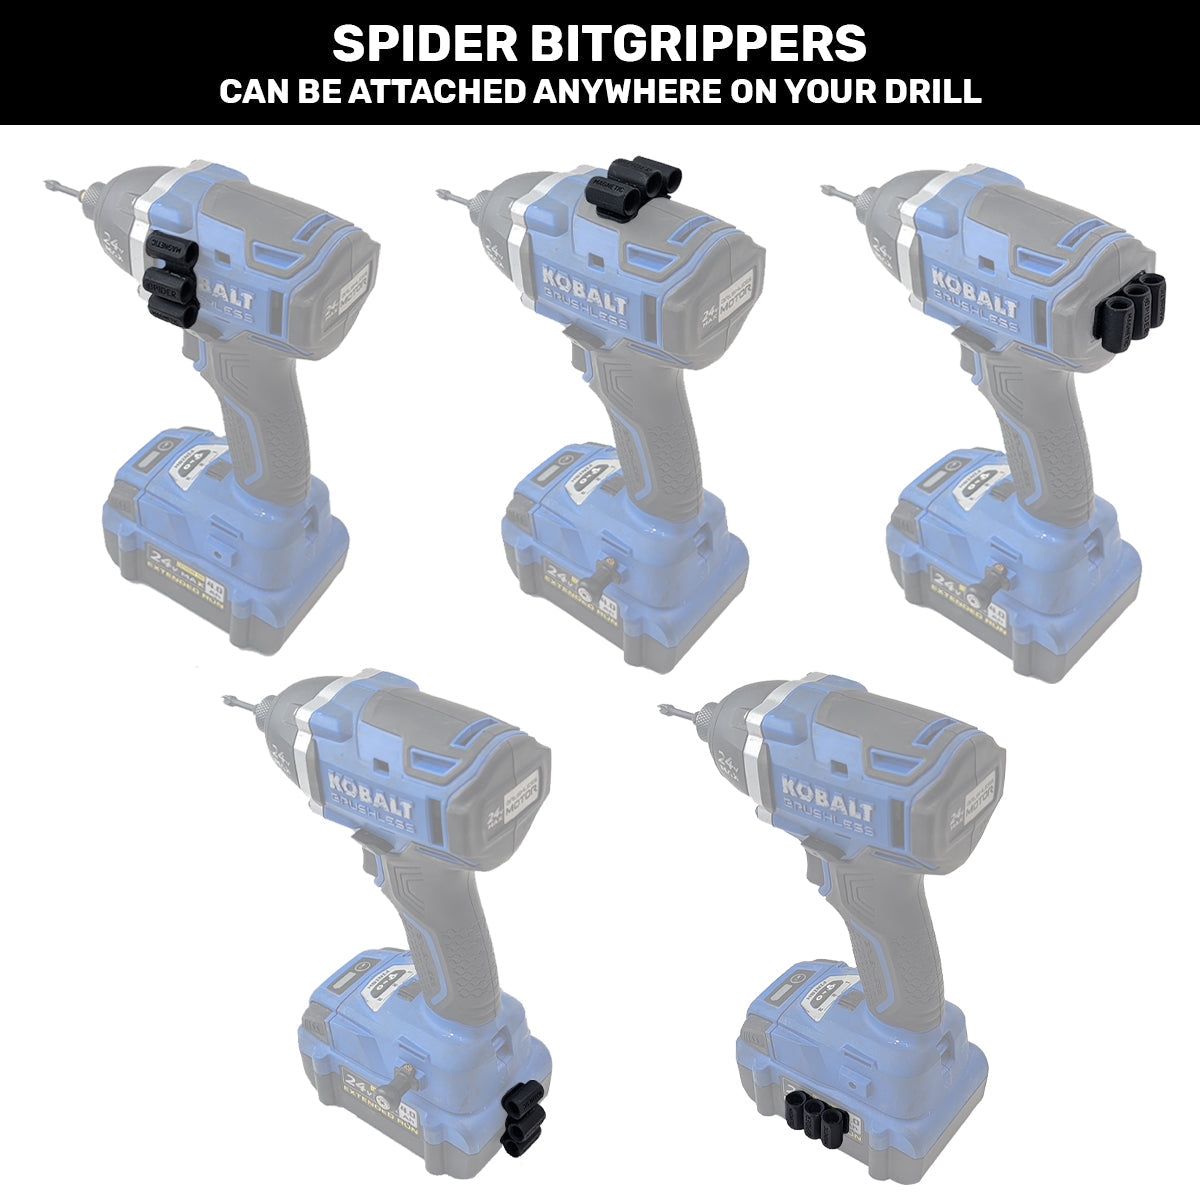 Magnetic BitGripper - Pack of 3